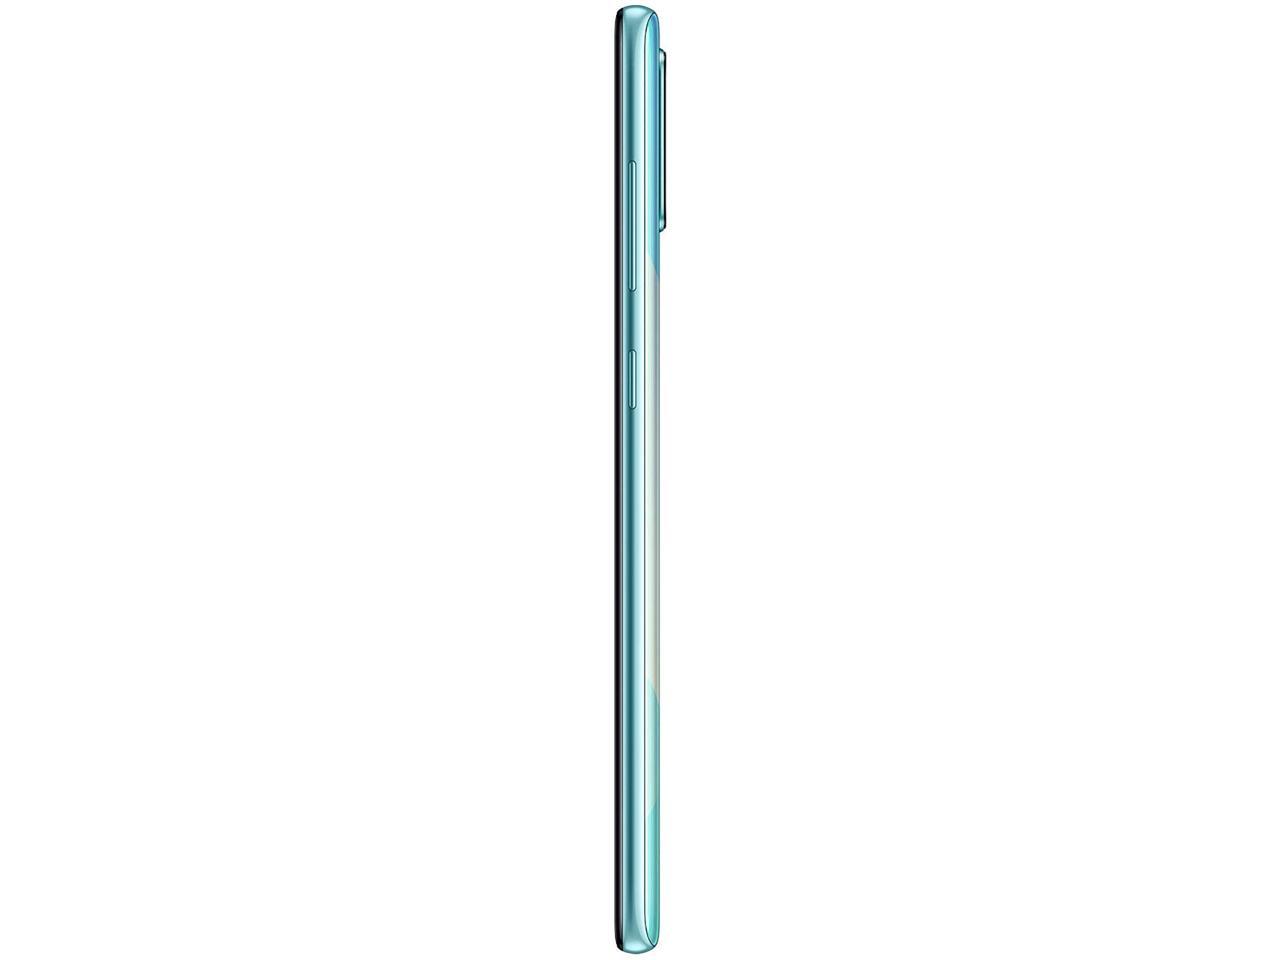 Samsung Galaxy A71 A715F 128GB Dual-SIM GSM Unlocked Phone (International Variant/US Compatible LTE) - Prism Crush Blue